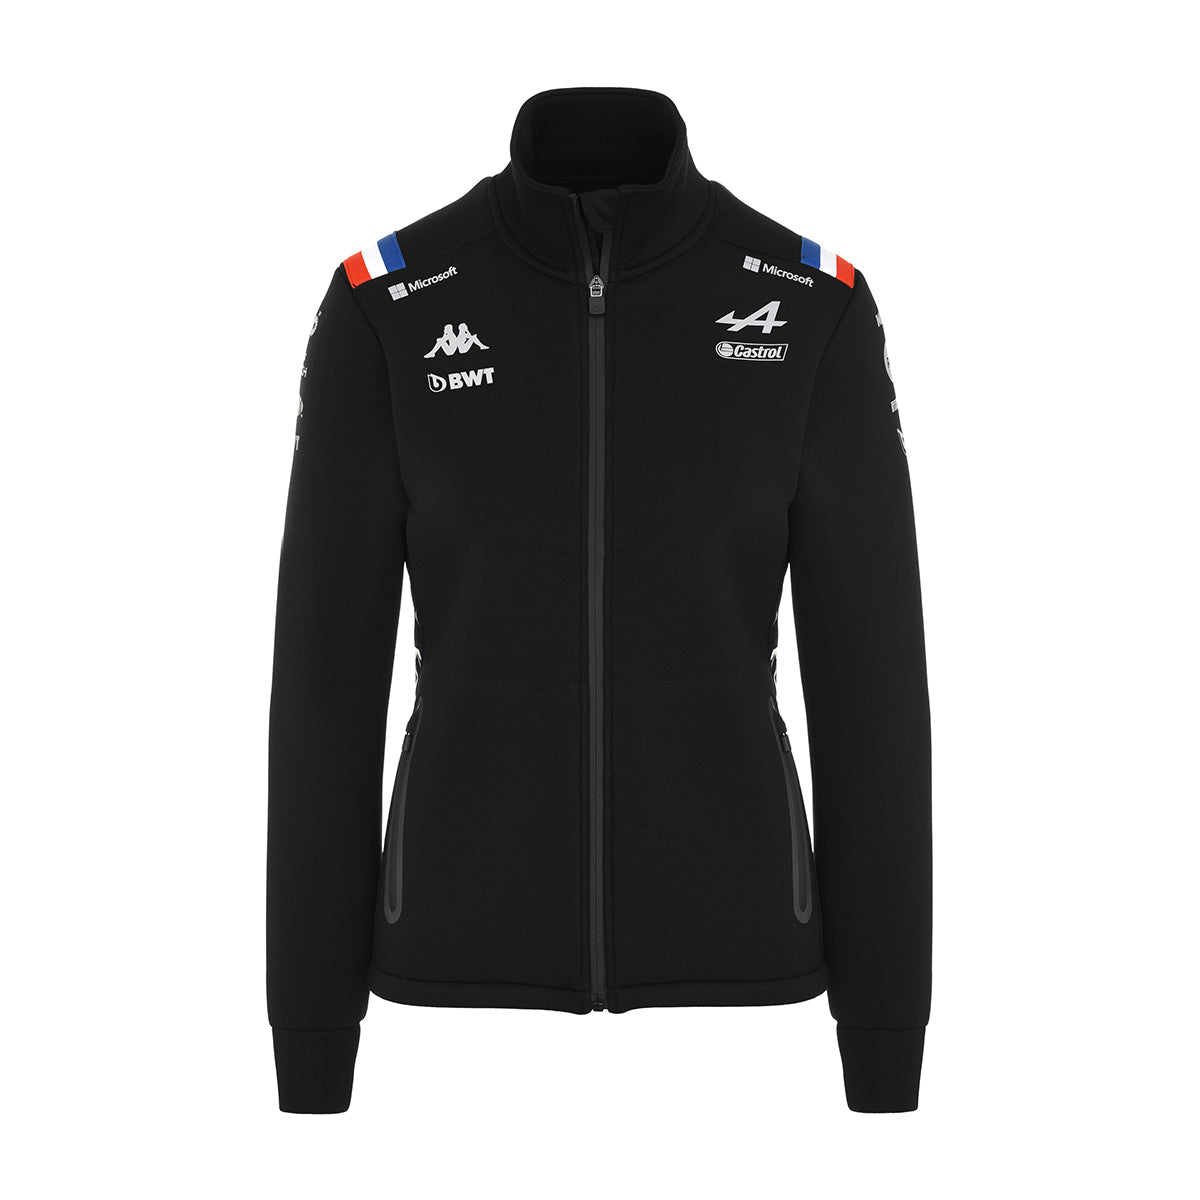 Veste Atrew BWT Alpine F1 Team Noir Femme - Image 1